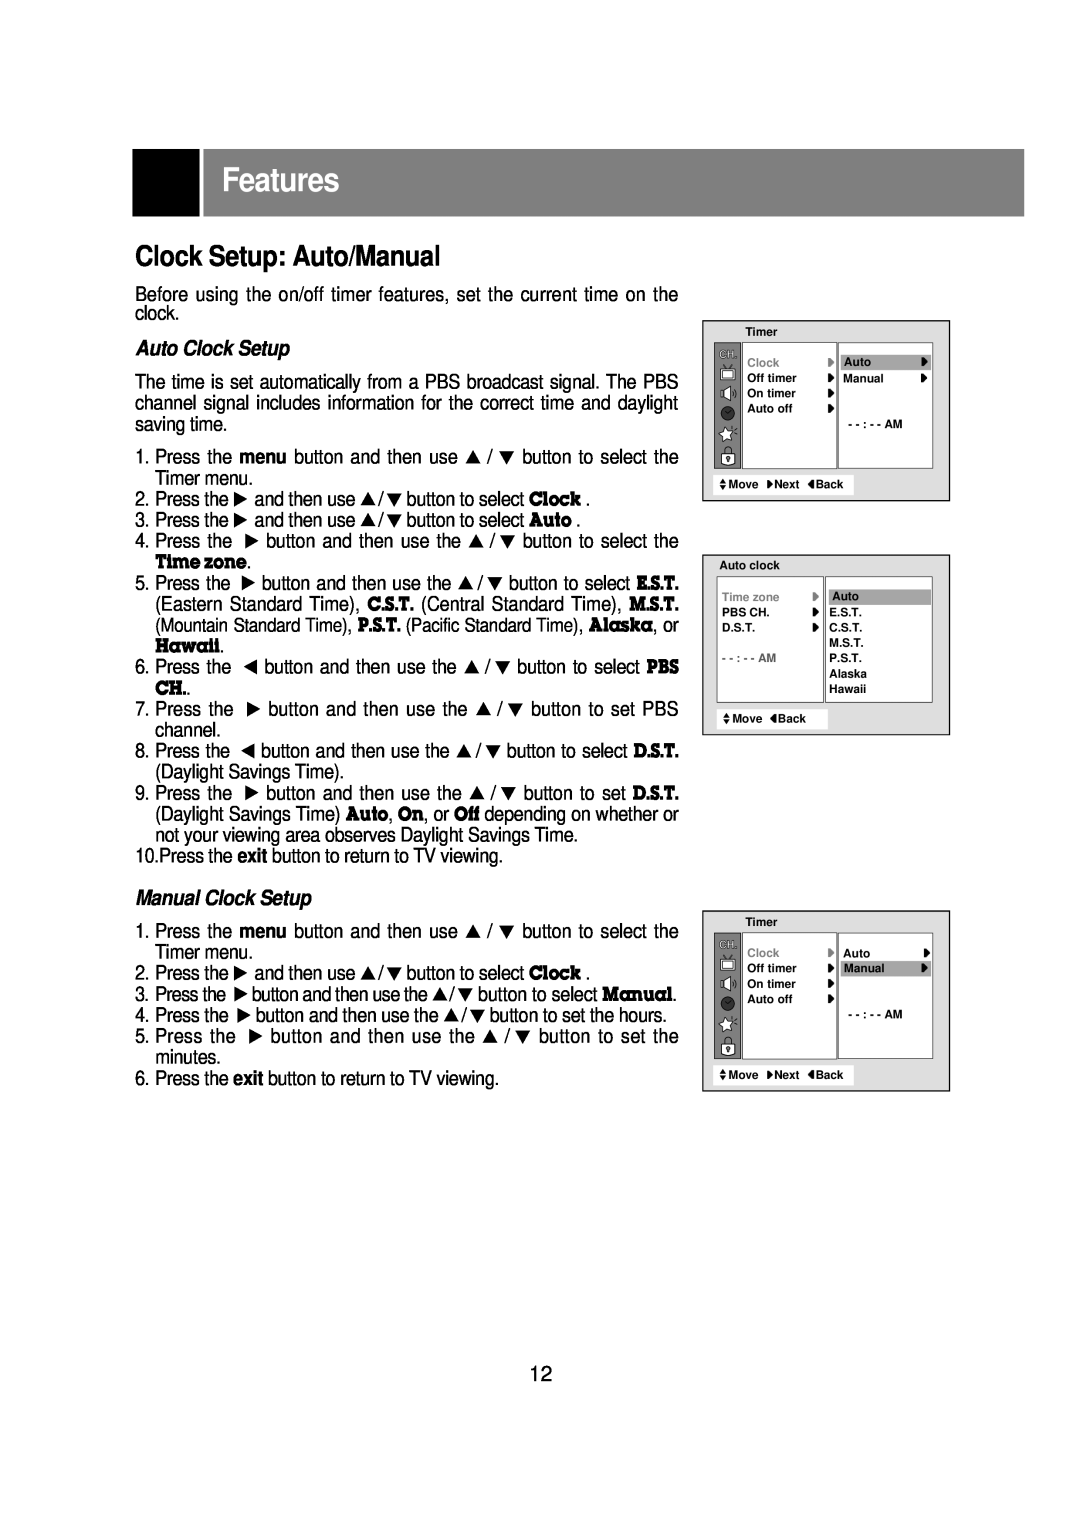 Zenith R40W46 warranty Features, Clock Setup Auto/Manual, Auto Clock Setup, Manual Clock Setup 